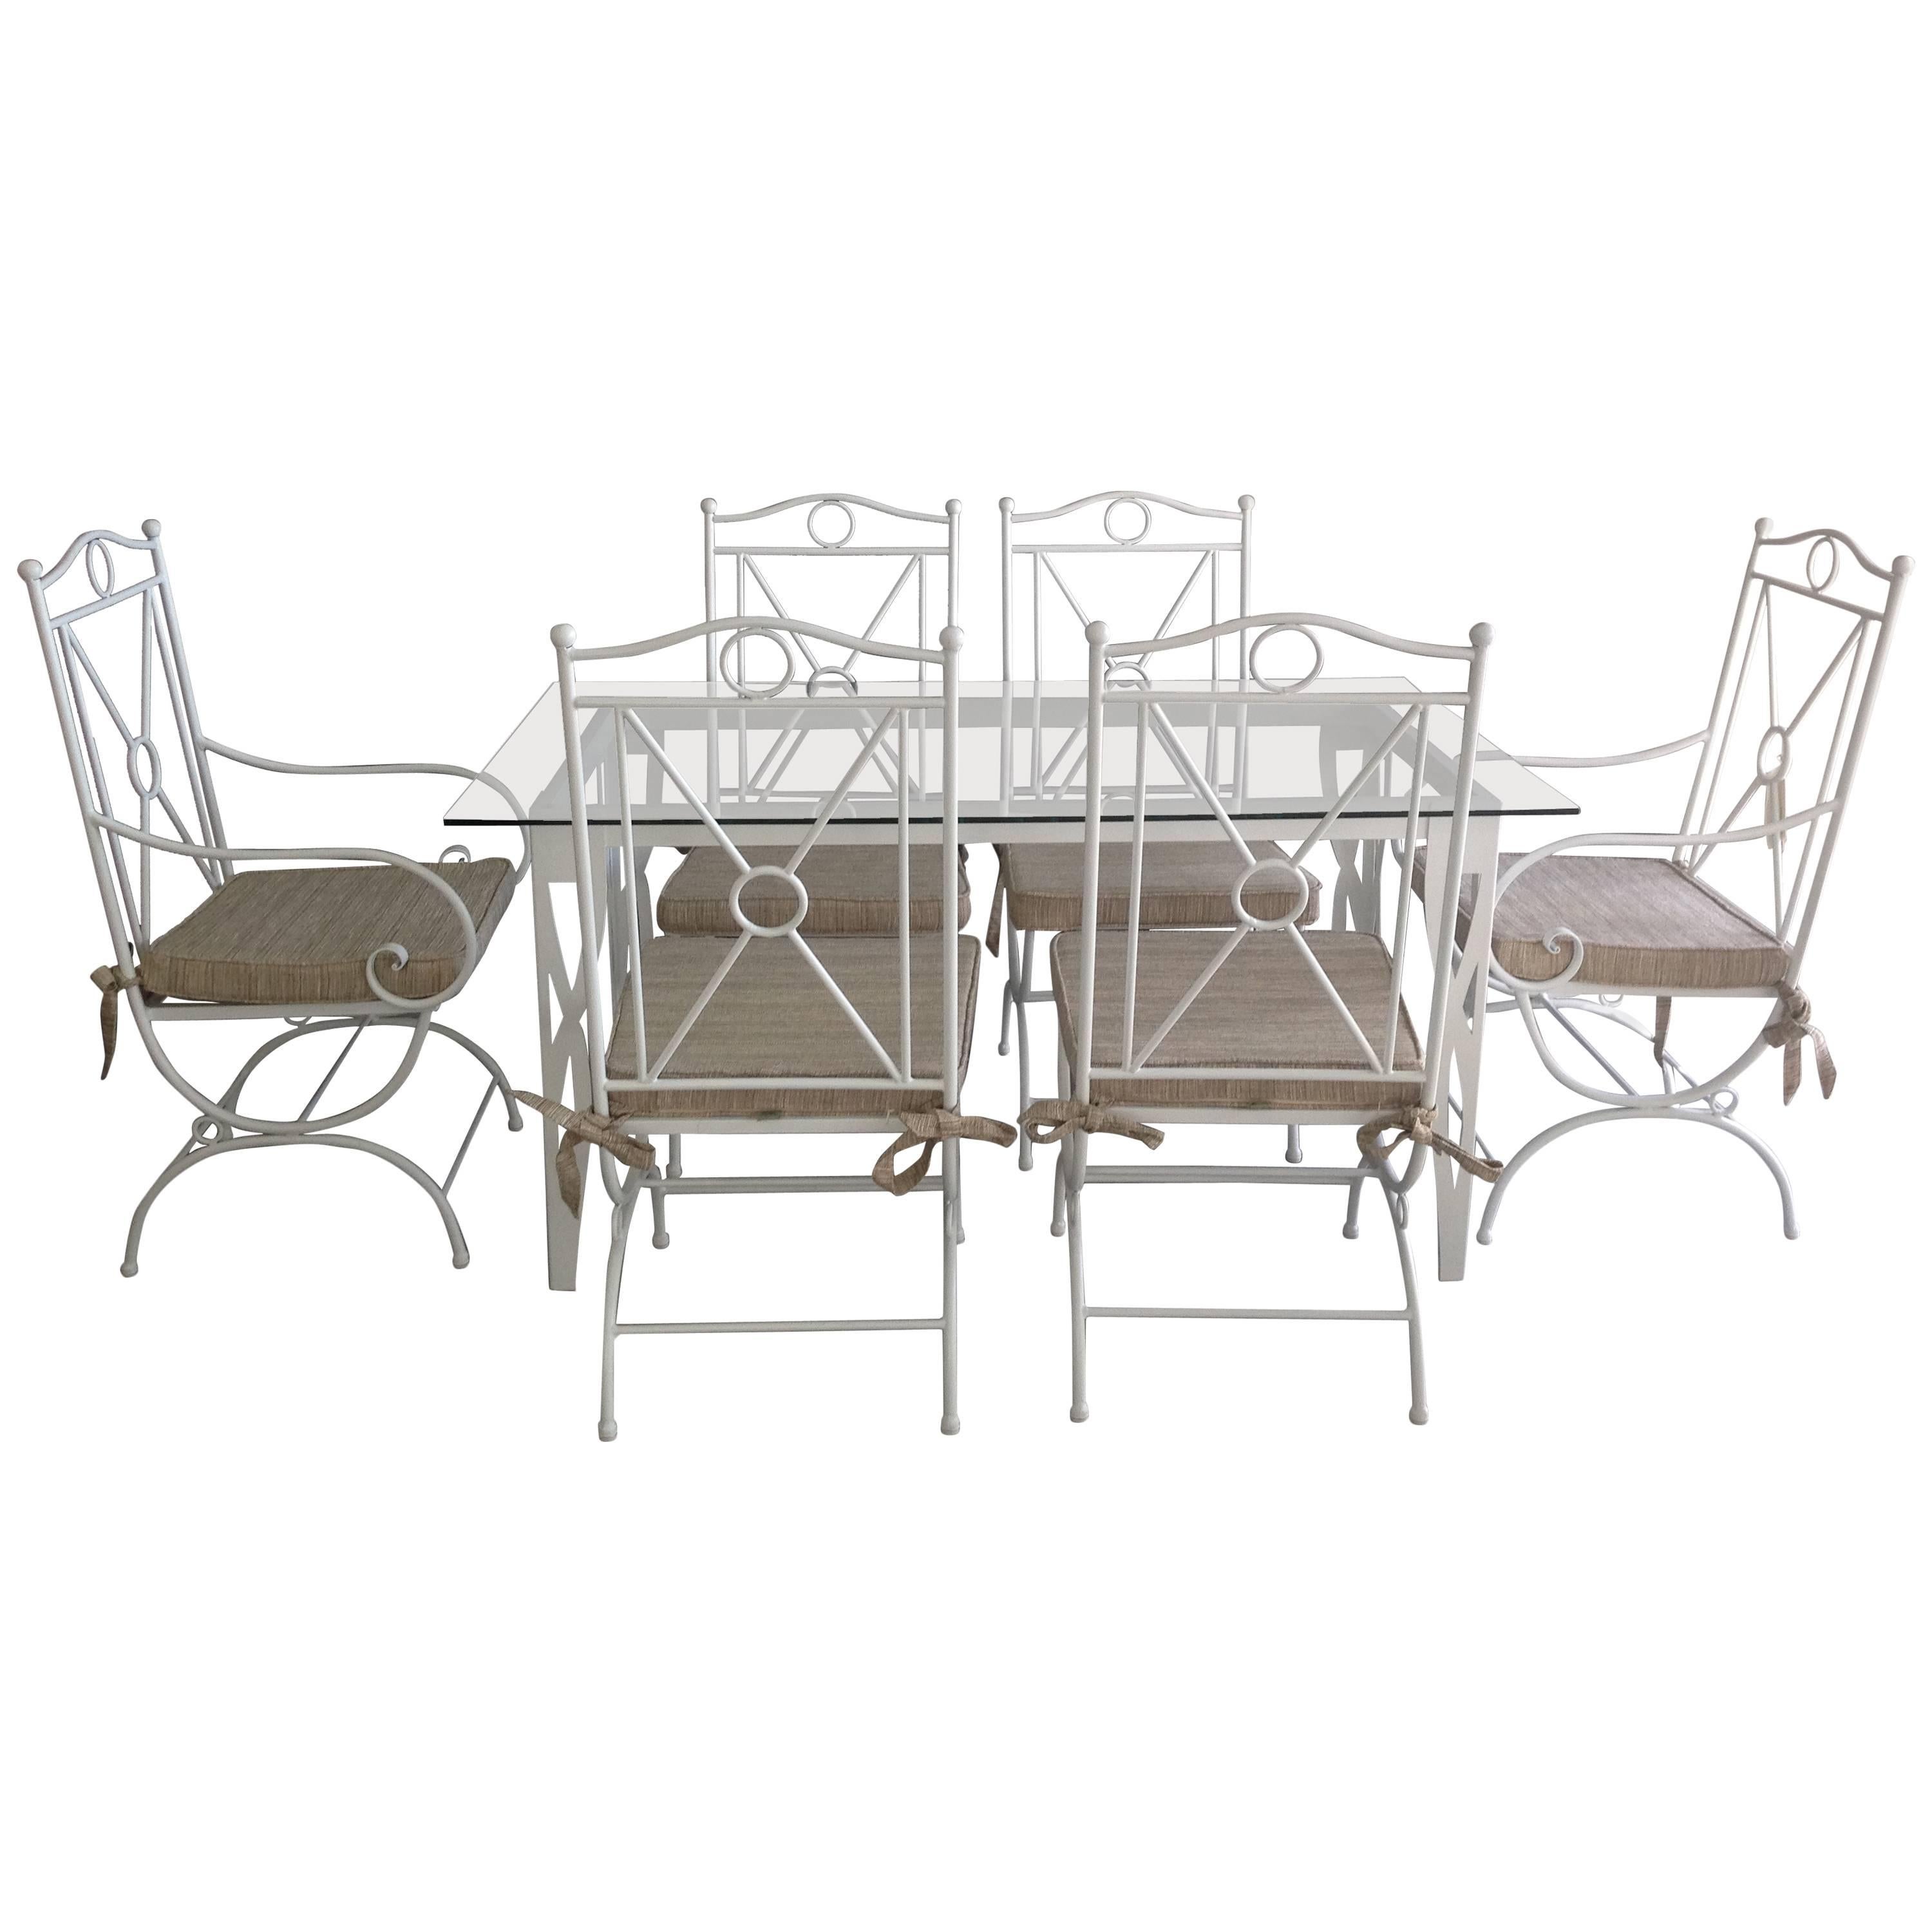 Handmade White Wrought Iron Patio Dining Set.Garden furniture